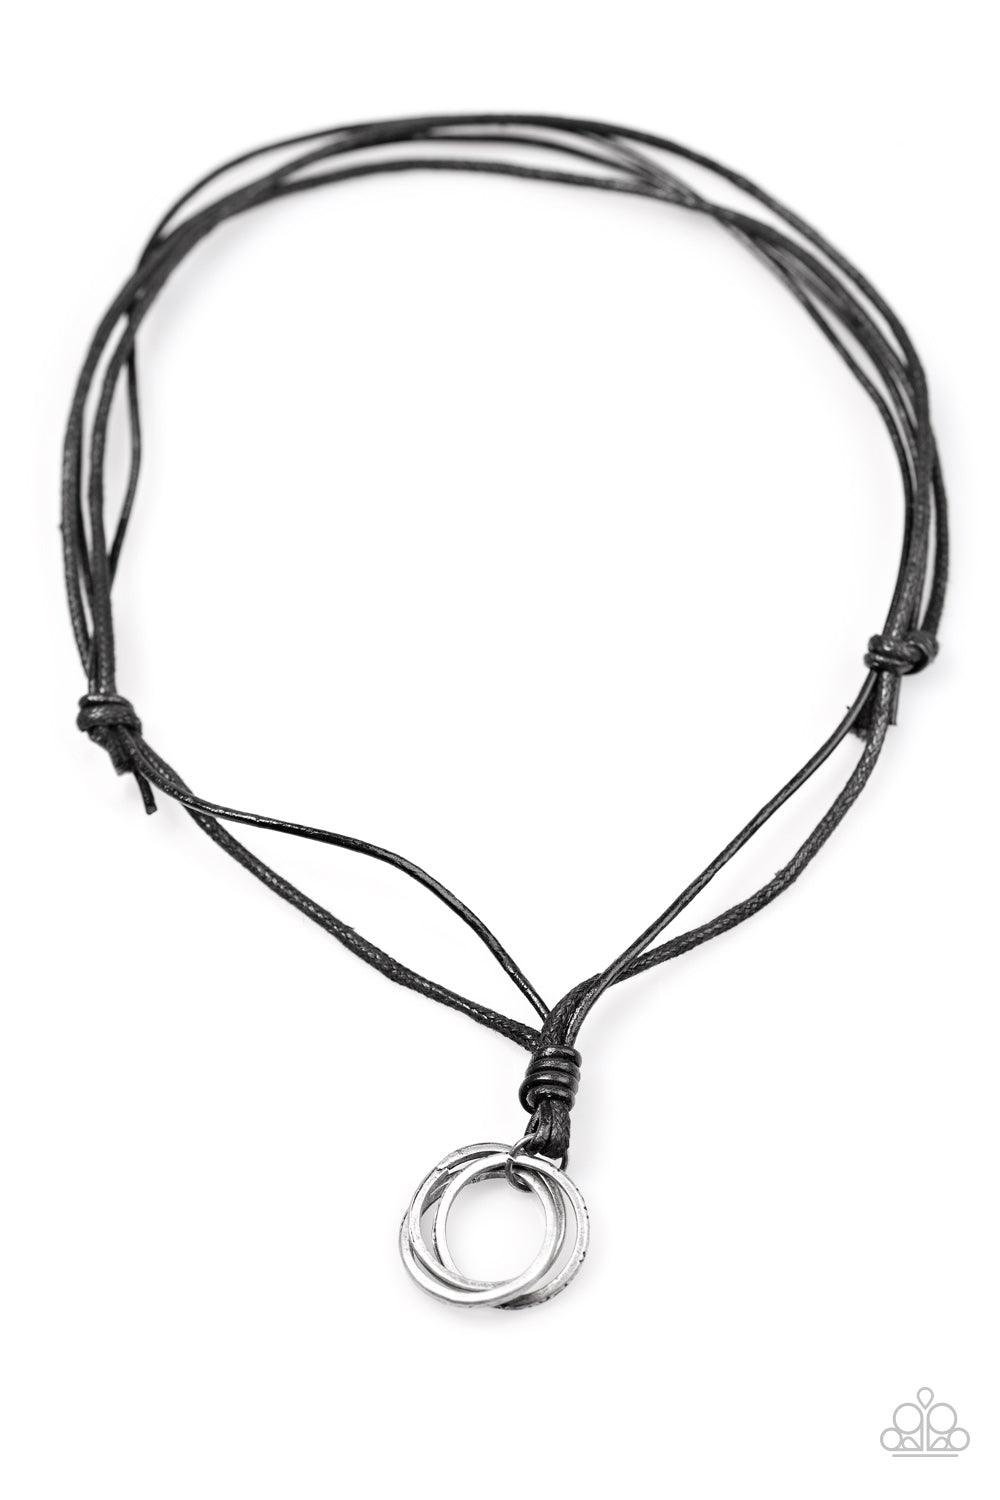 Mountain Man Black Bretta Necklace by Urban Jewelry 